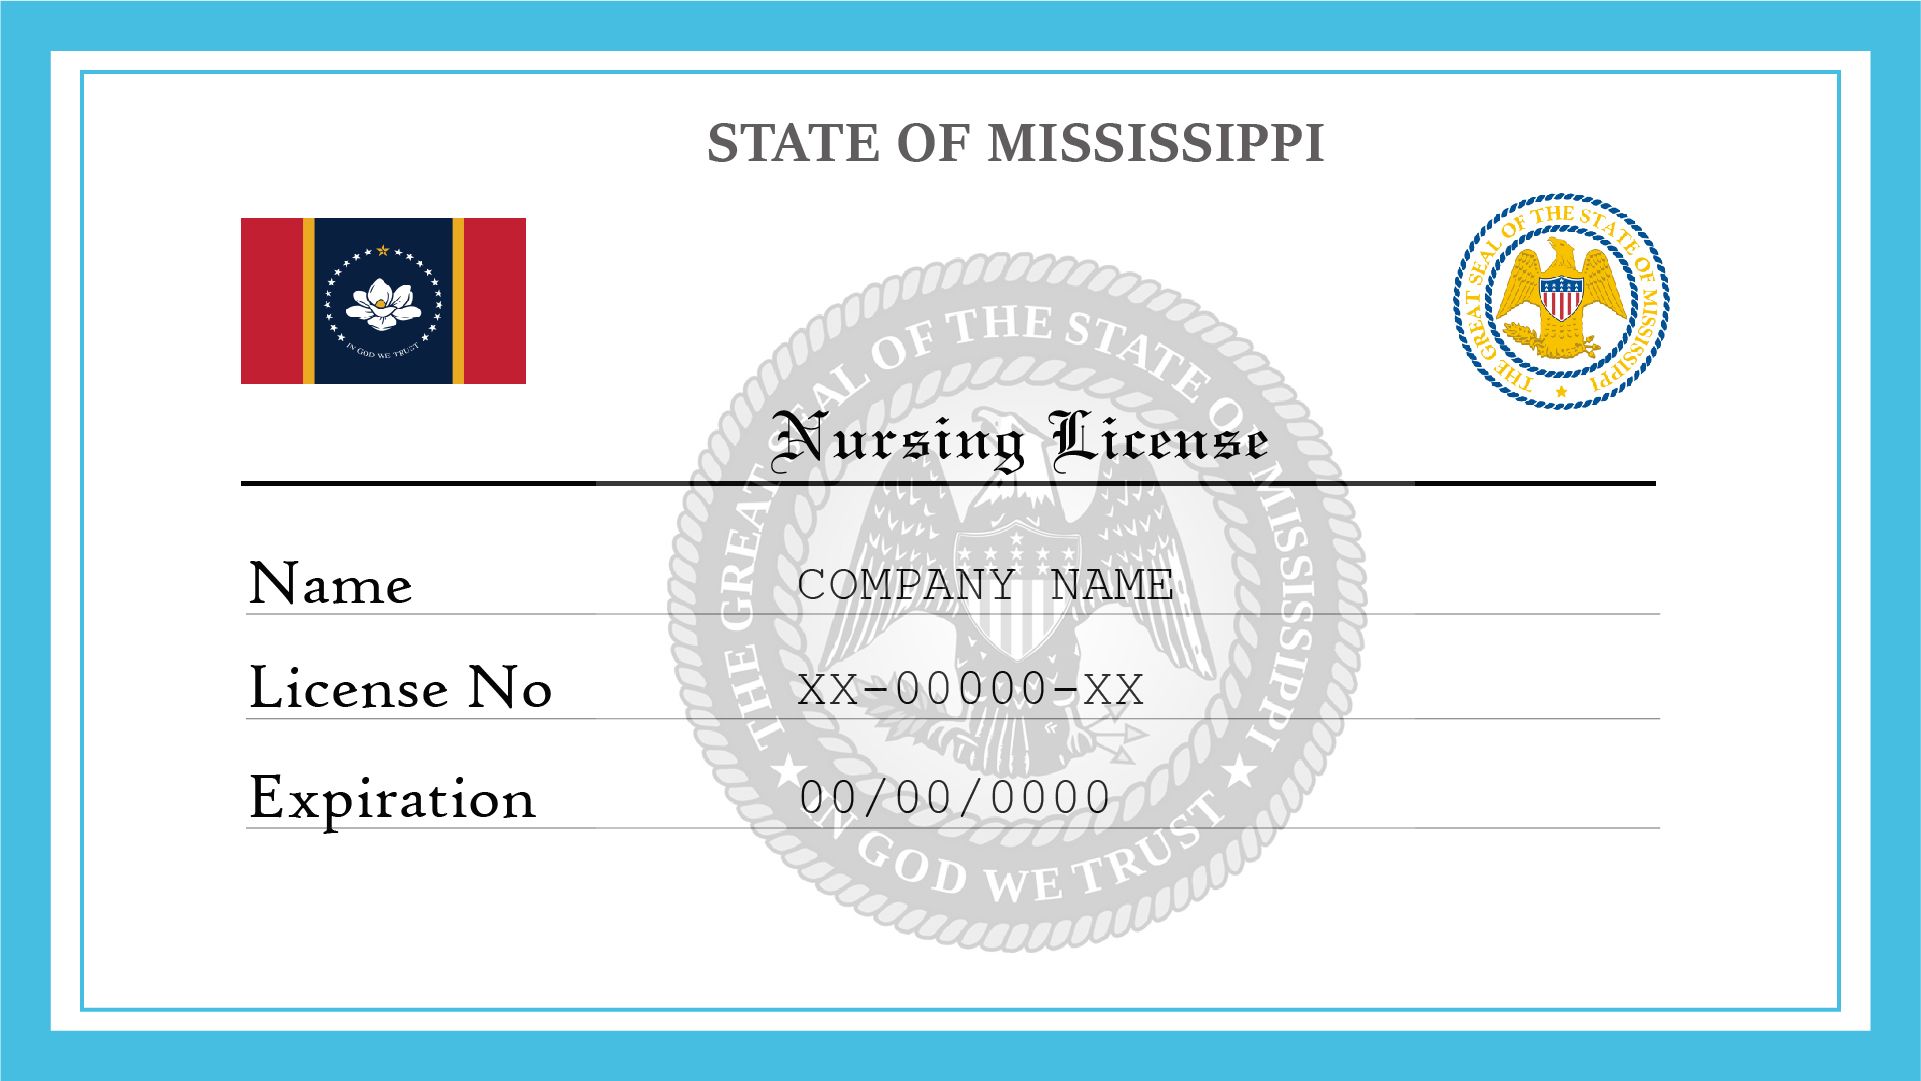 Mississippi Nursing License 480e2330c9 